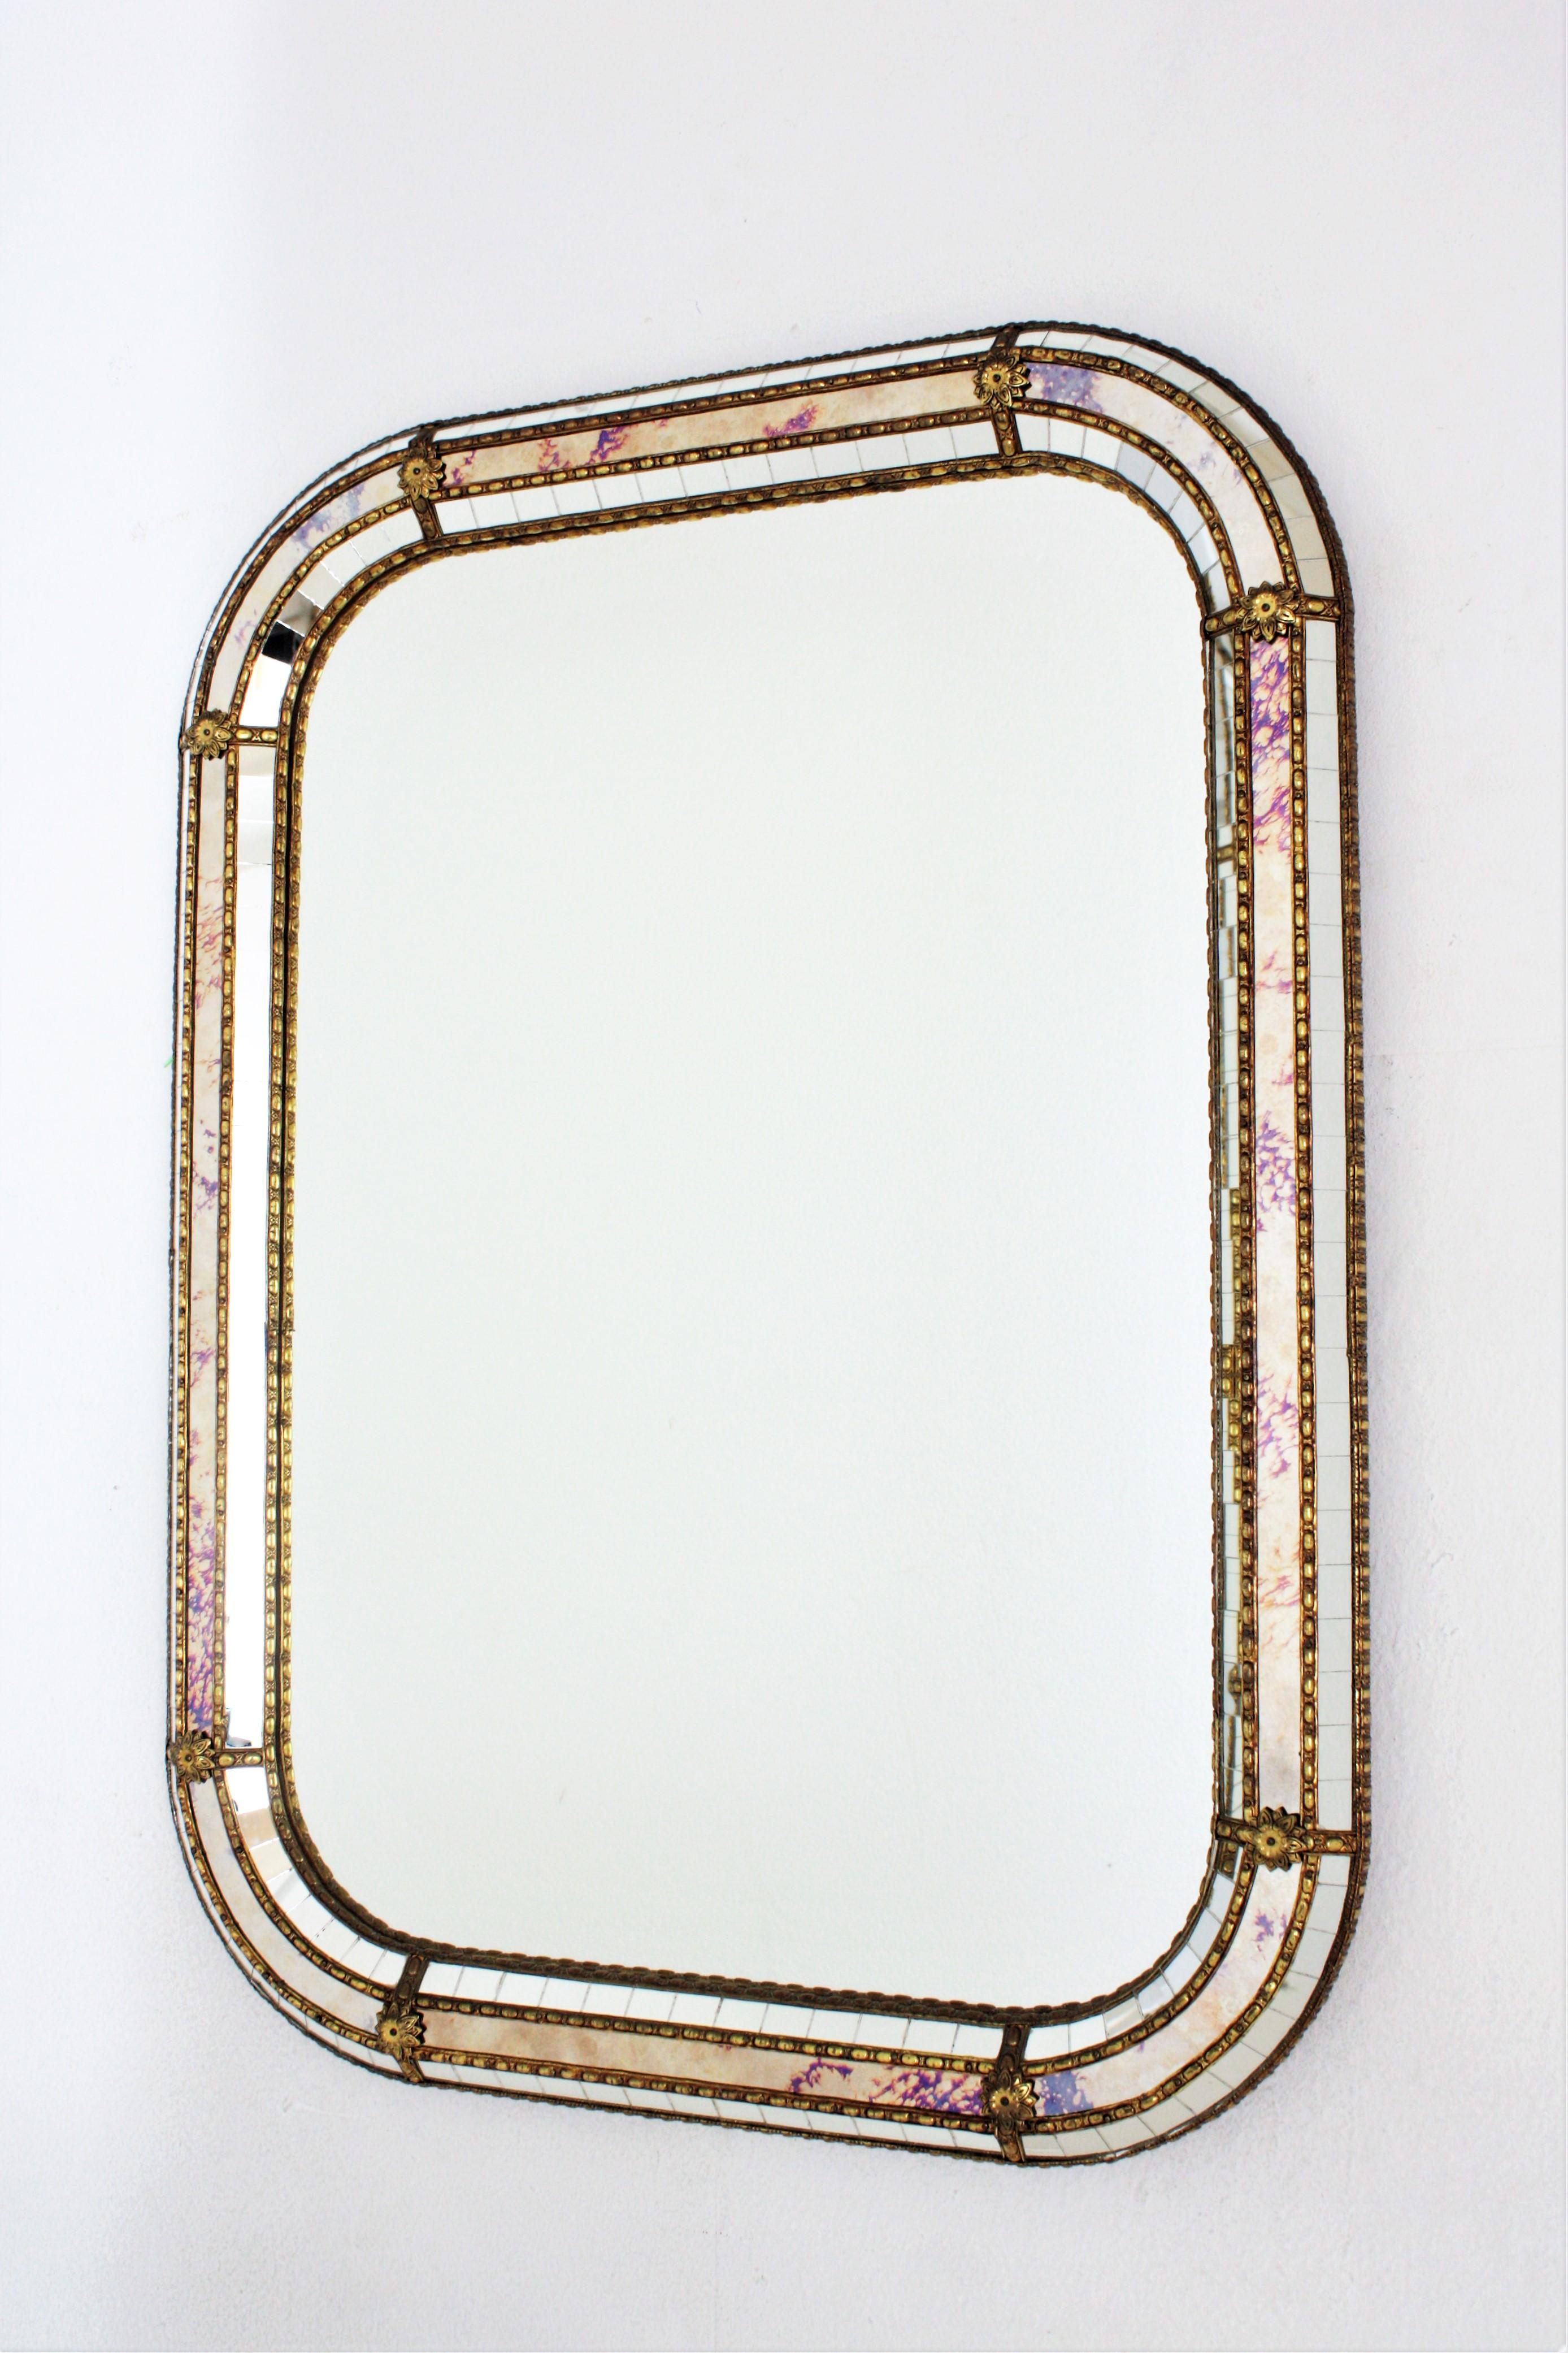 20th Century Venetian Style Rectangular Mirror with Brass Details